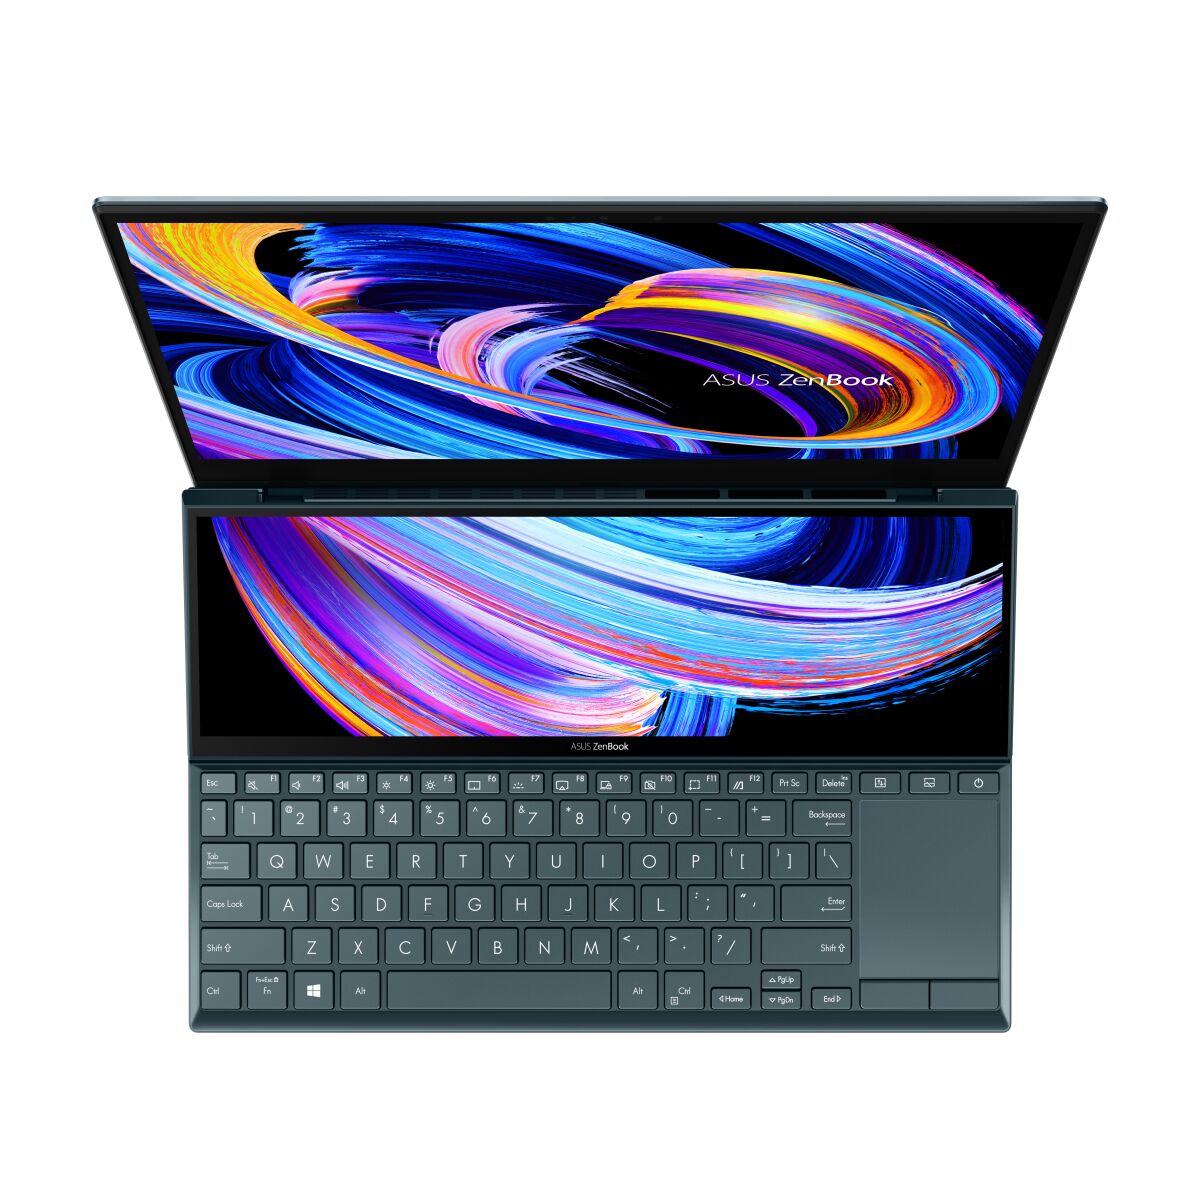 ASUS ZenBook Duo UX482EG-KA108T - 90NB0S51-M03460 laptop specifications